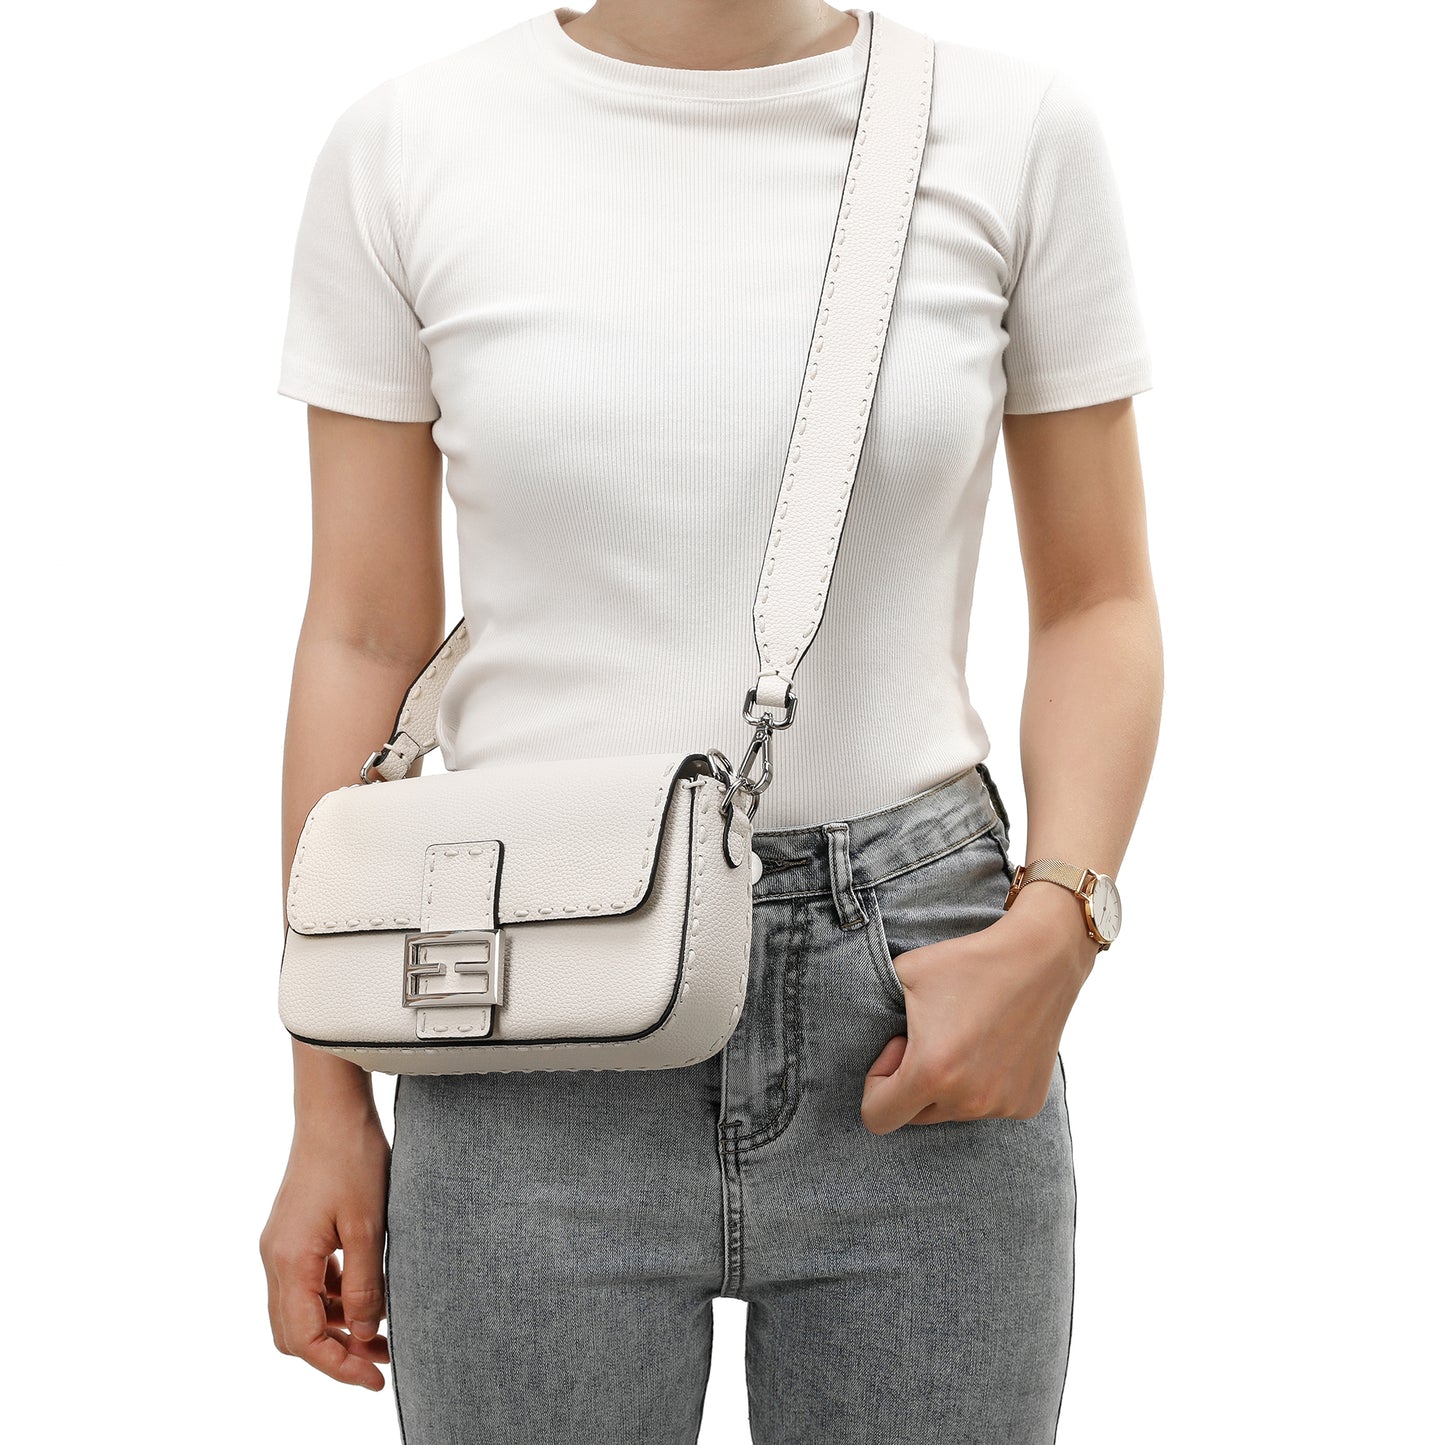 Full-grain Leather Crossboby/ Shoulder Bag